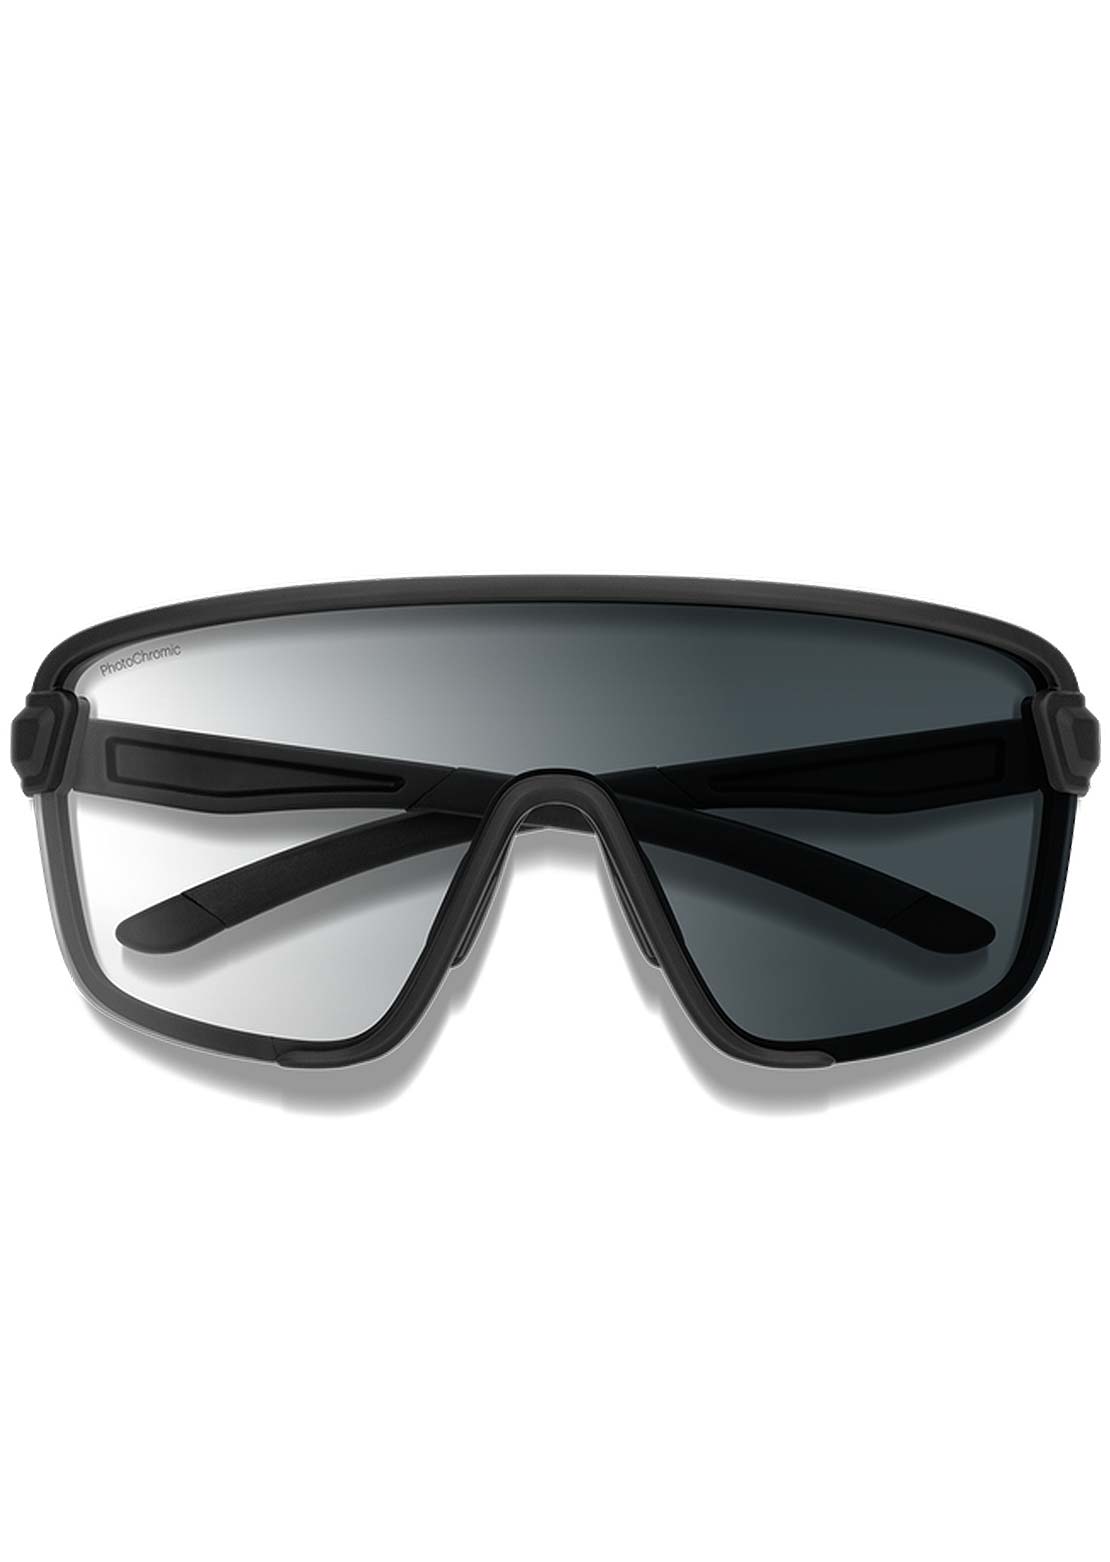 Mountain Bike Sunglasses & Goggles - PRFO Sports